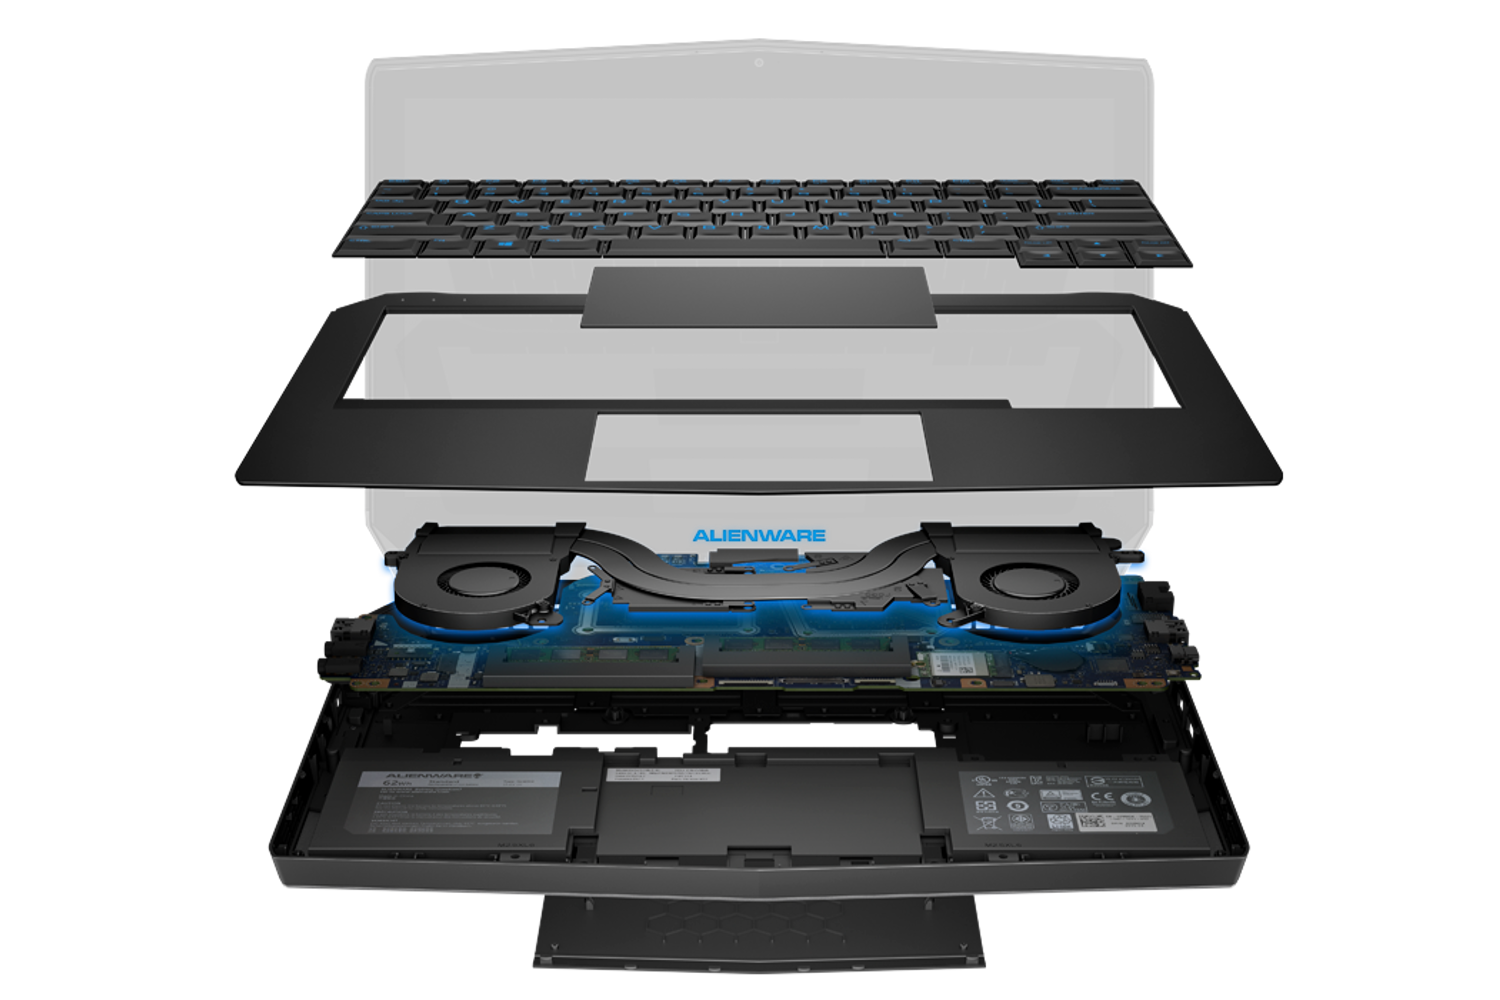 dell alienware e3 2016 debut 13 laptop